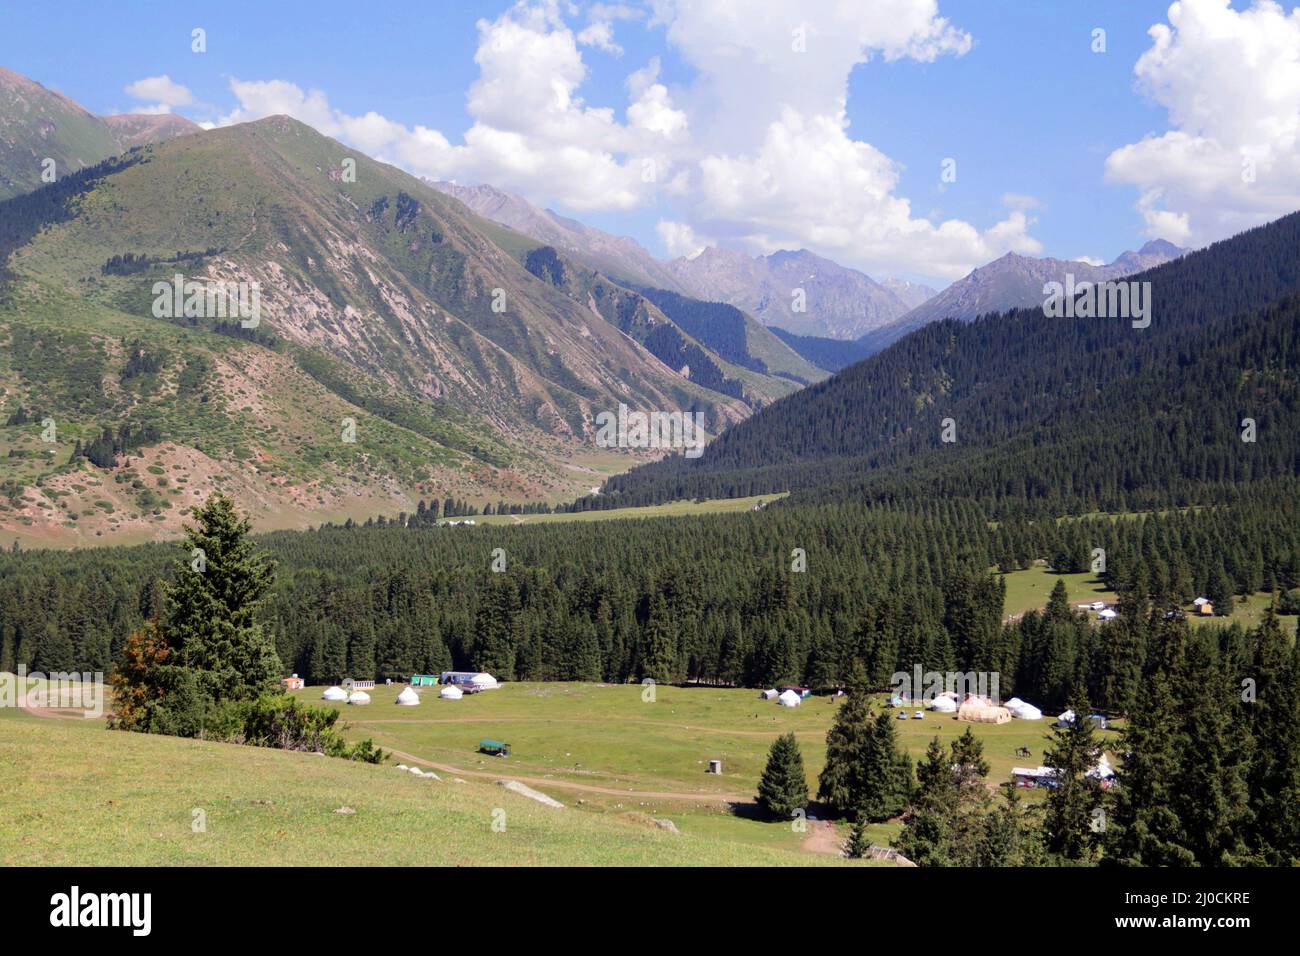 Campamento de yurta en el valle de Dzhety Oguz cerca de Karakol, Terskej Alatoo Montañas, Kirguistán Foto de stock